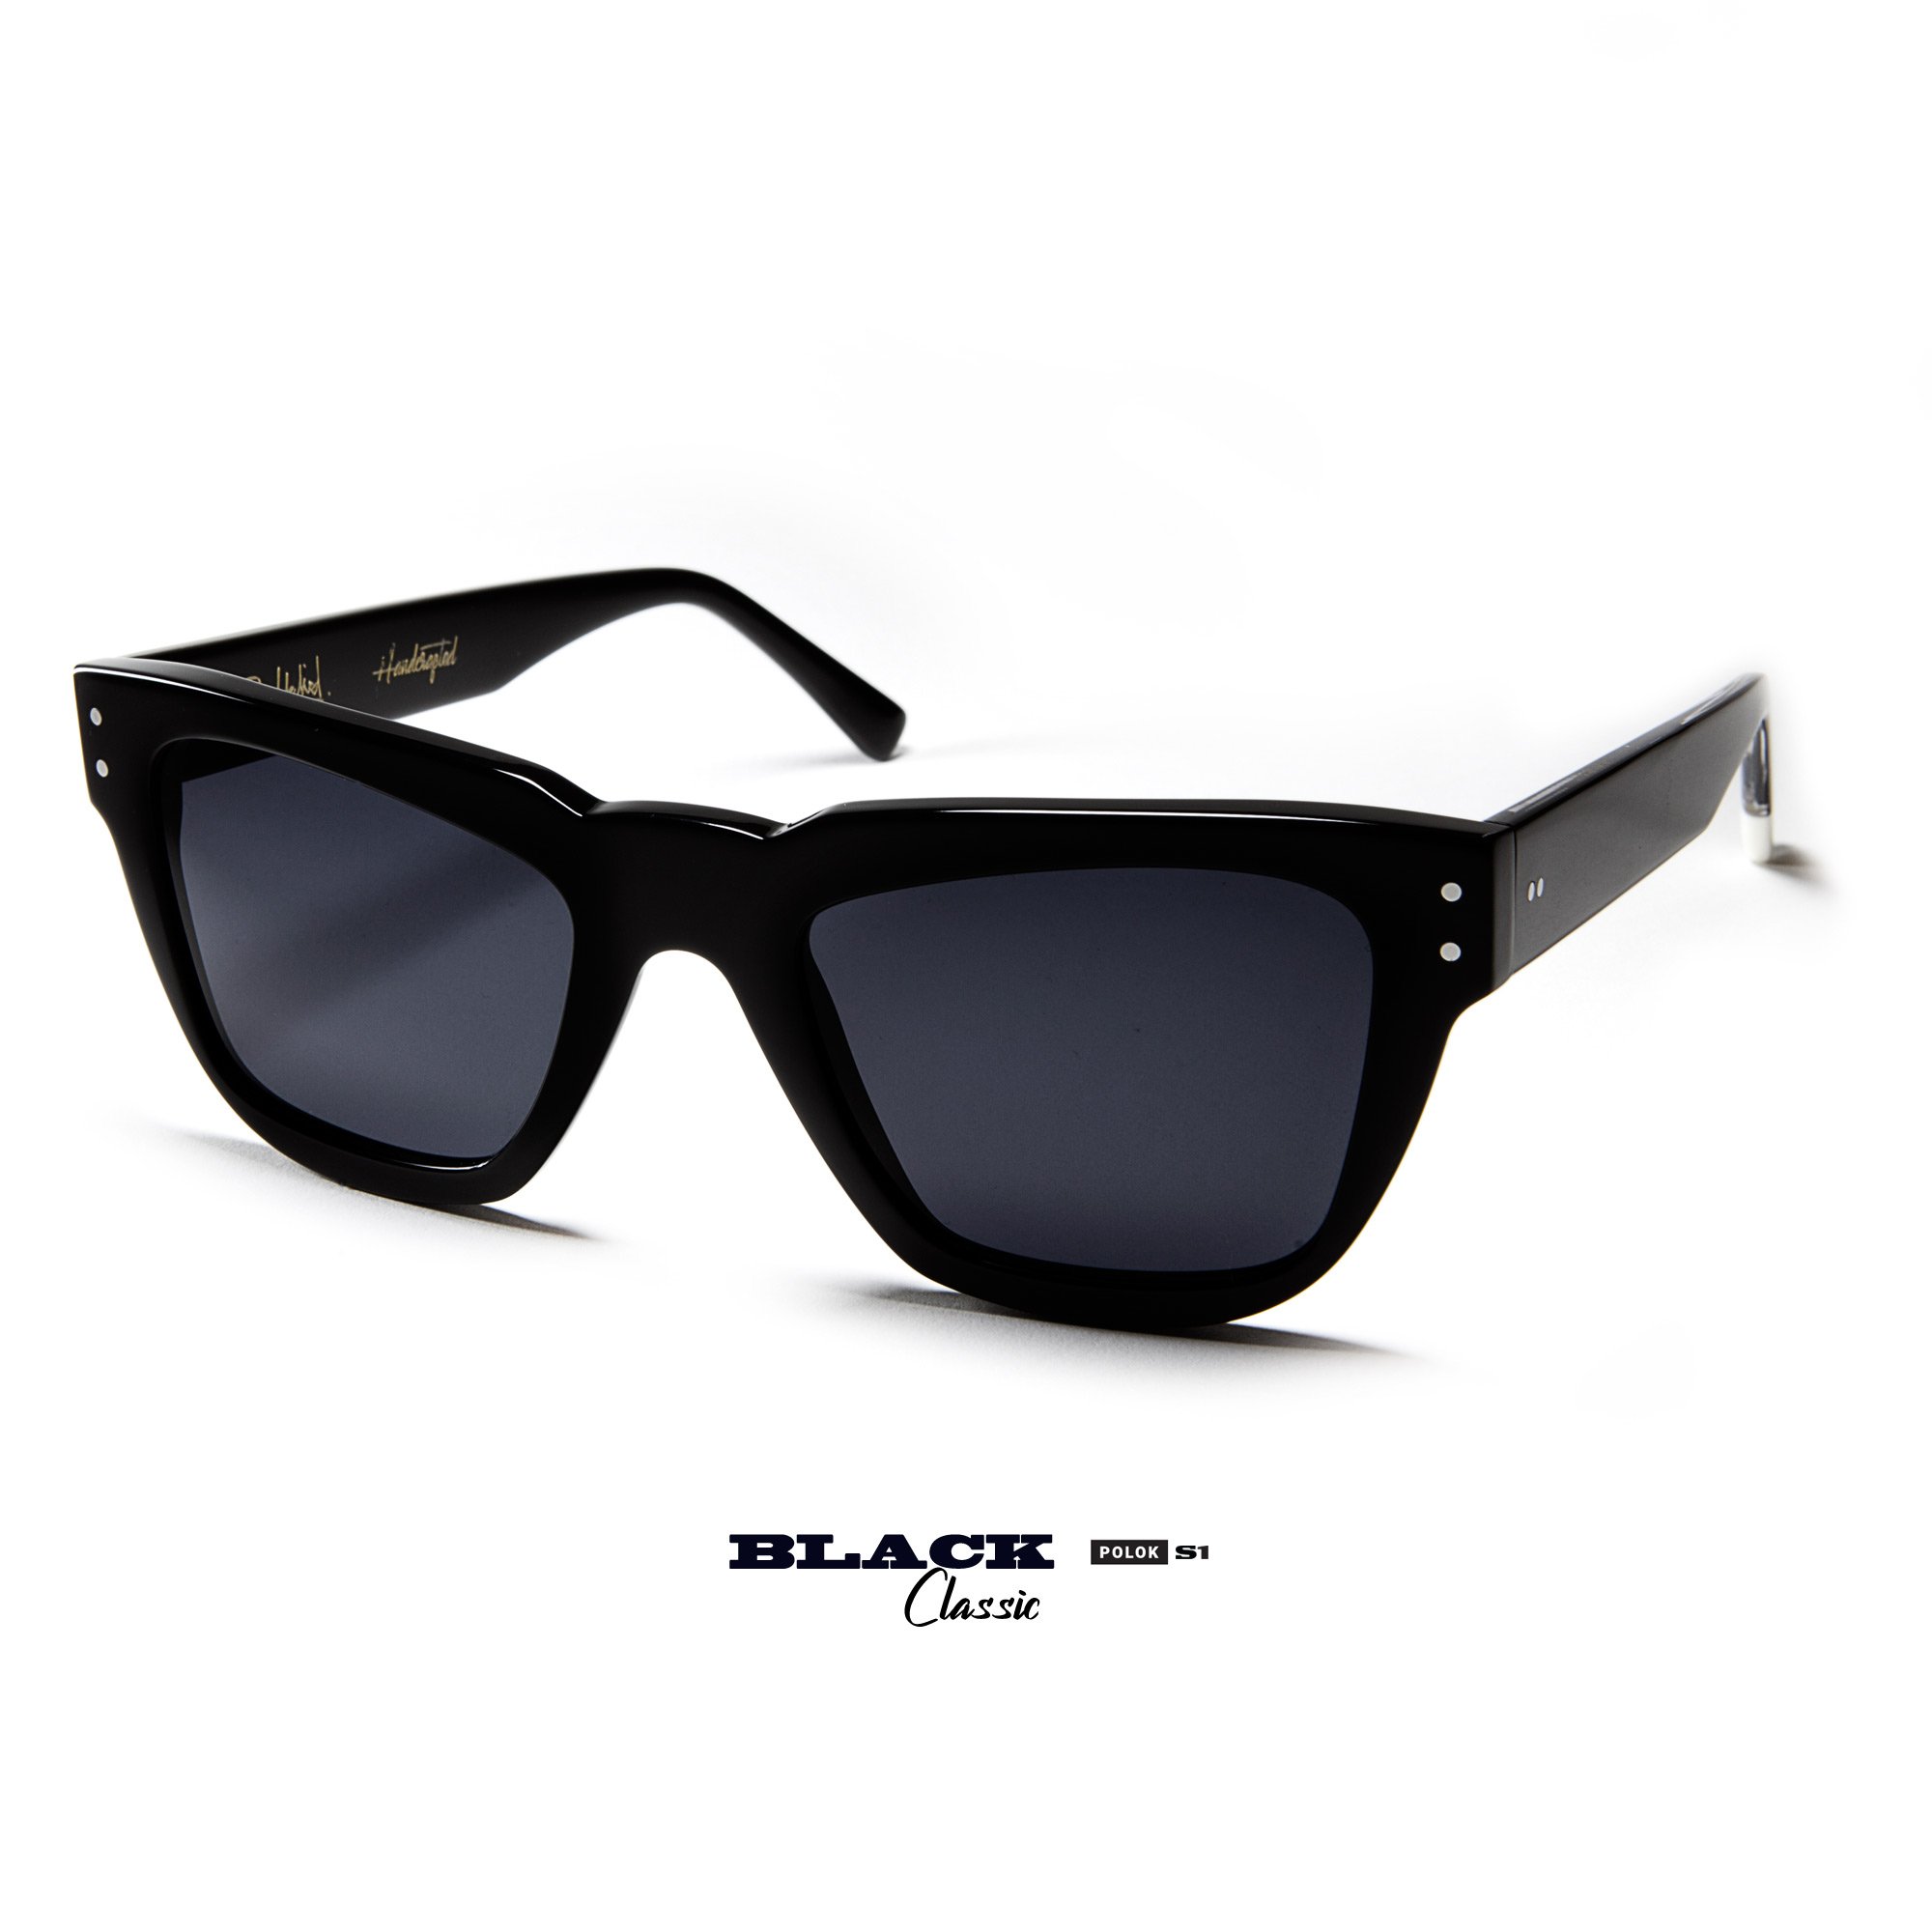 Polok_S1_Black_Sunglasses_for_man_Best_online_store_trendy_Rob_adalierd_designer_Vienna_LA_Los-Angeles_Canada_addicted_to_the_Sun_White_part_leg.jpg